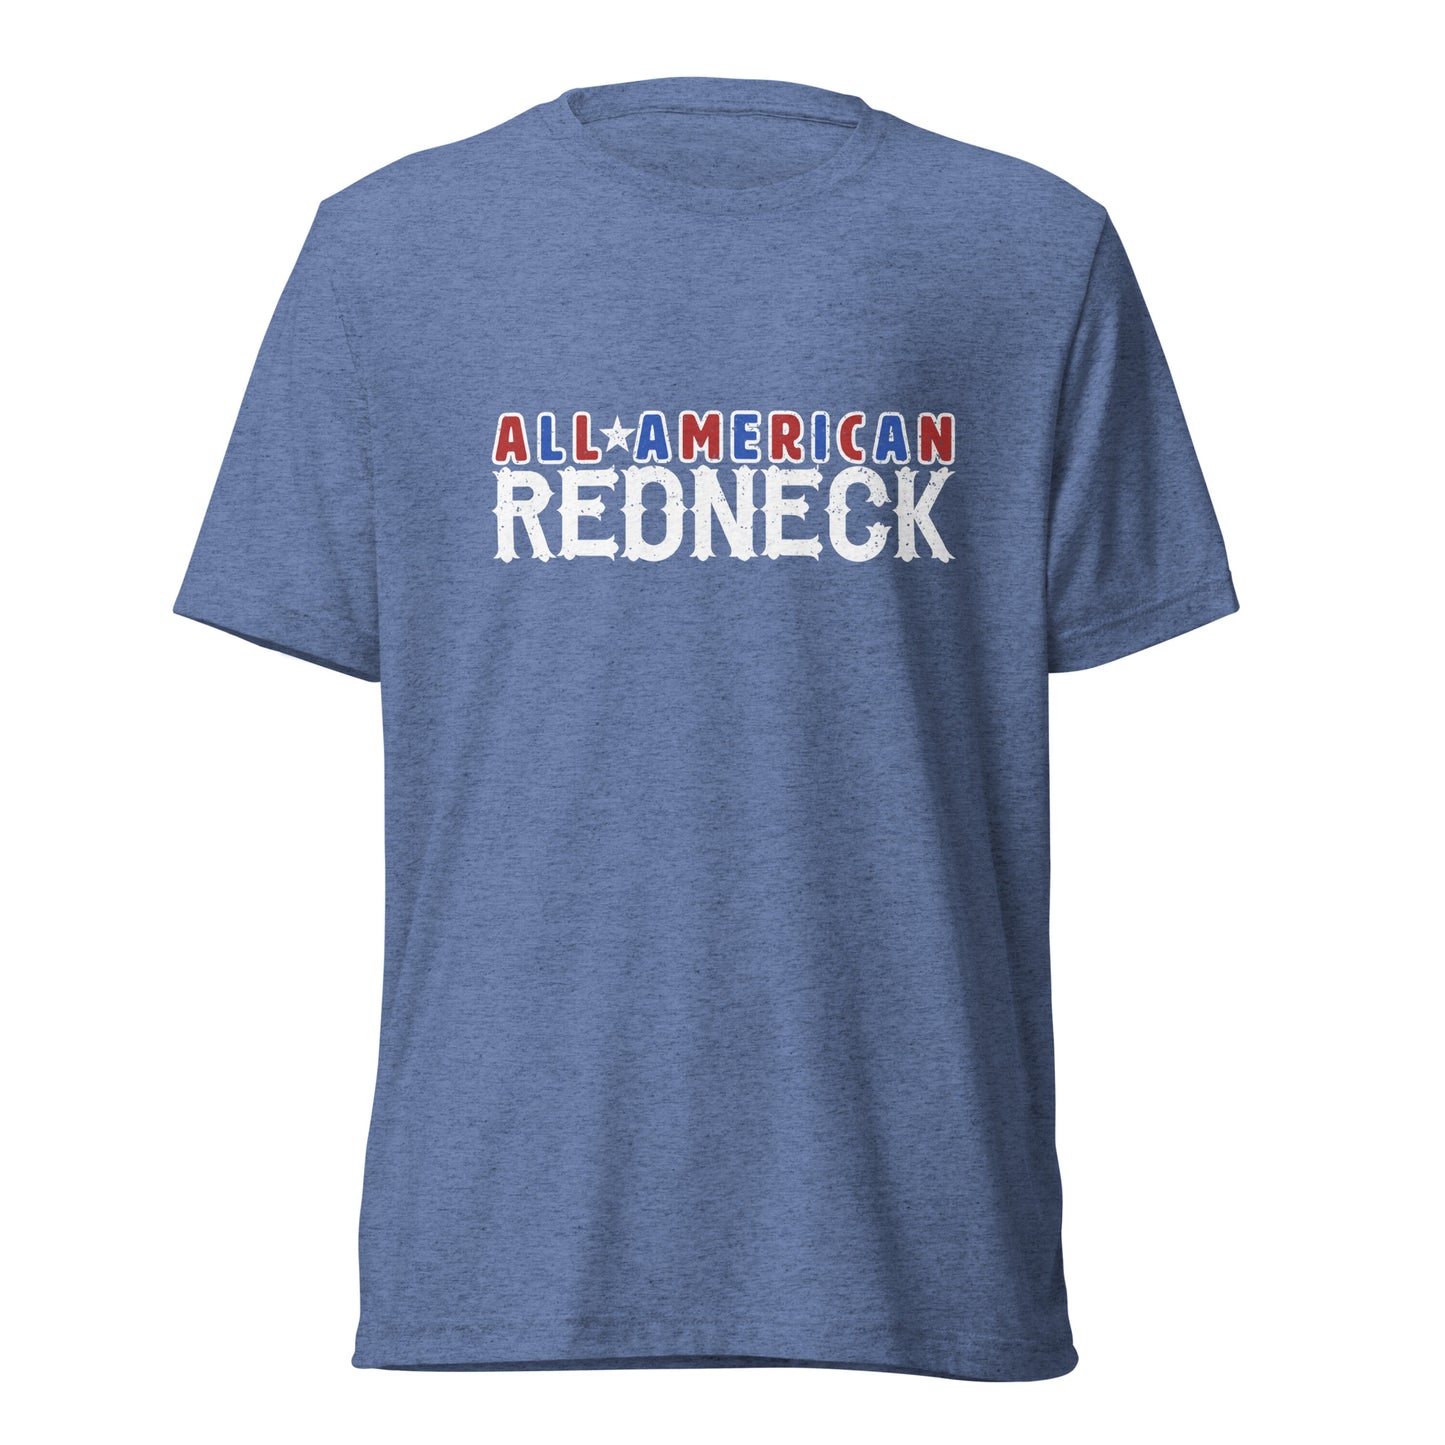 All-American Redneck